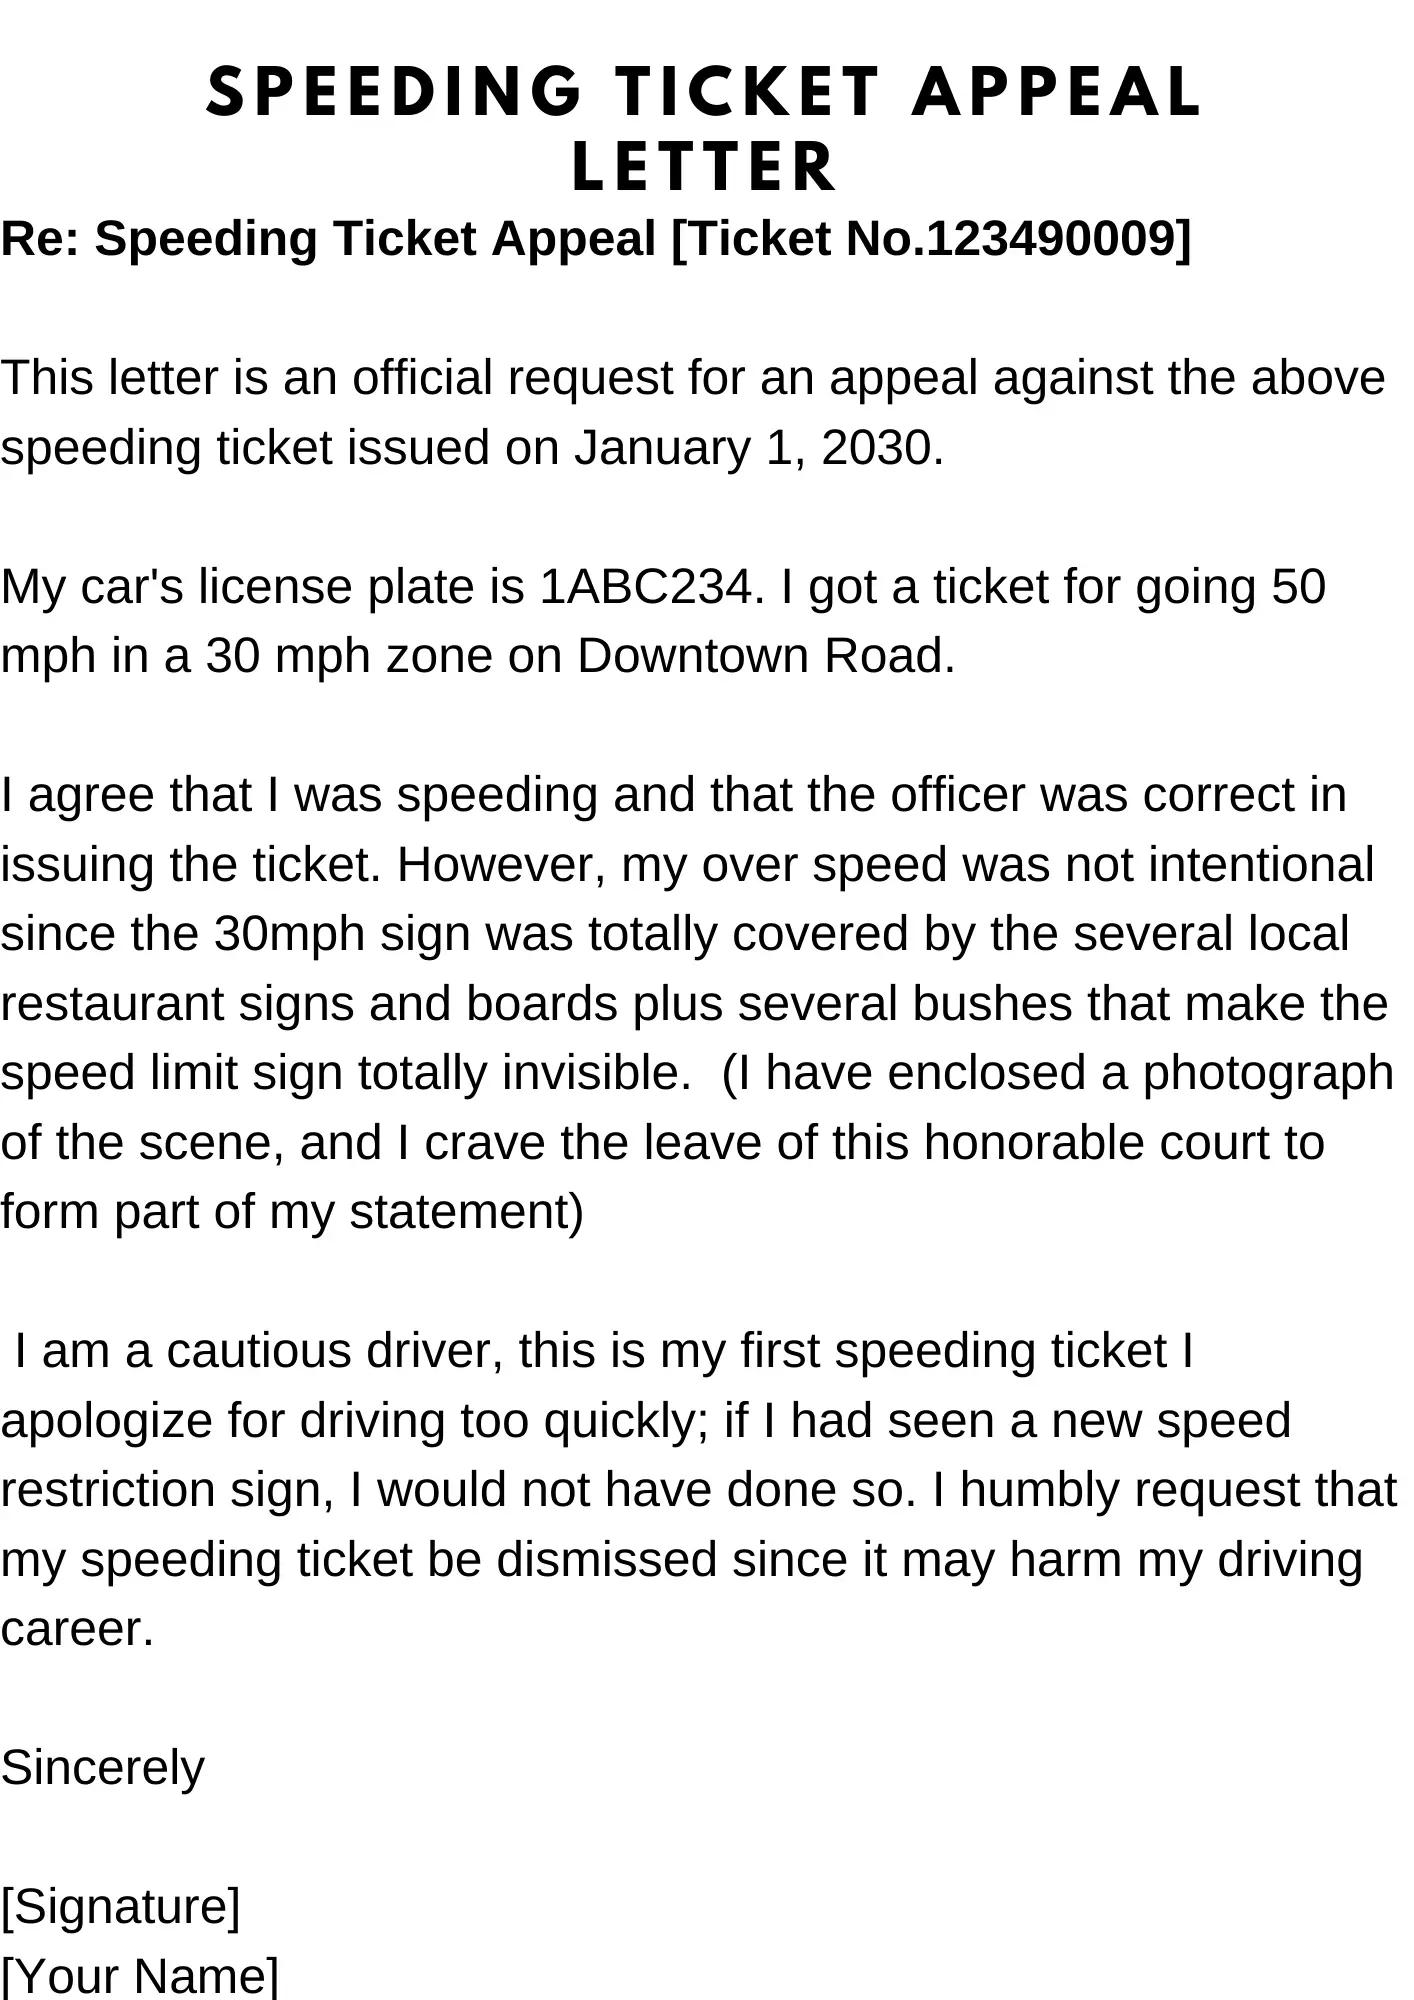 Speeding ticket appeal letter sample